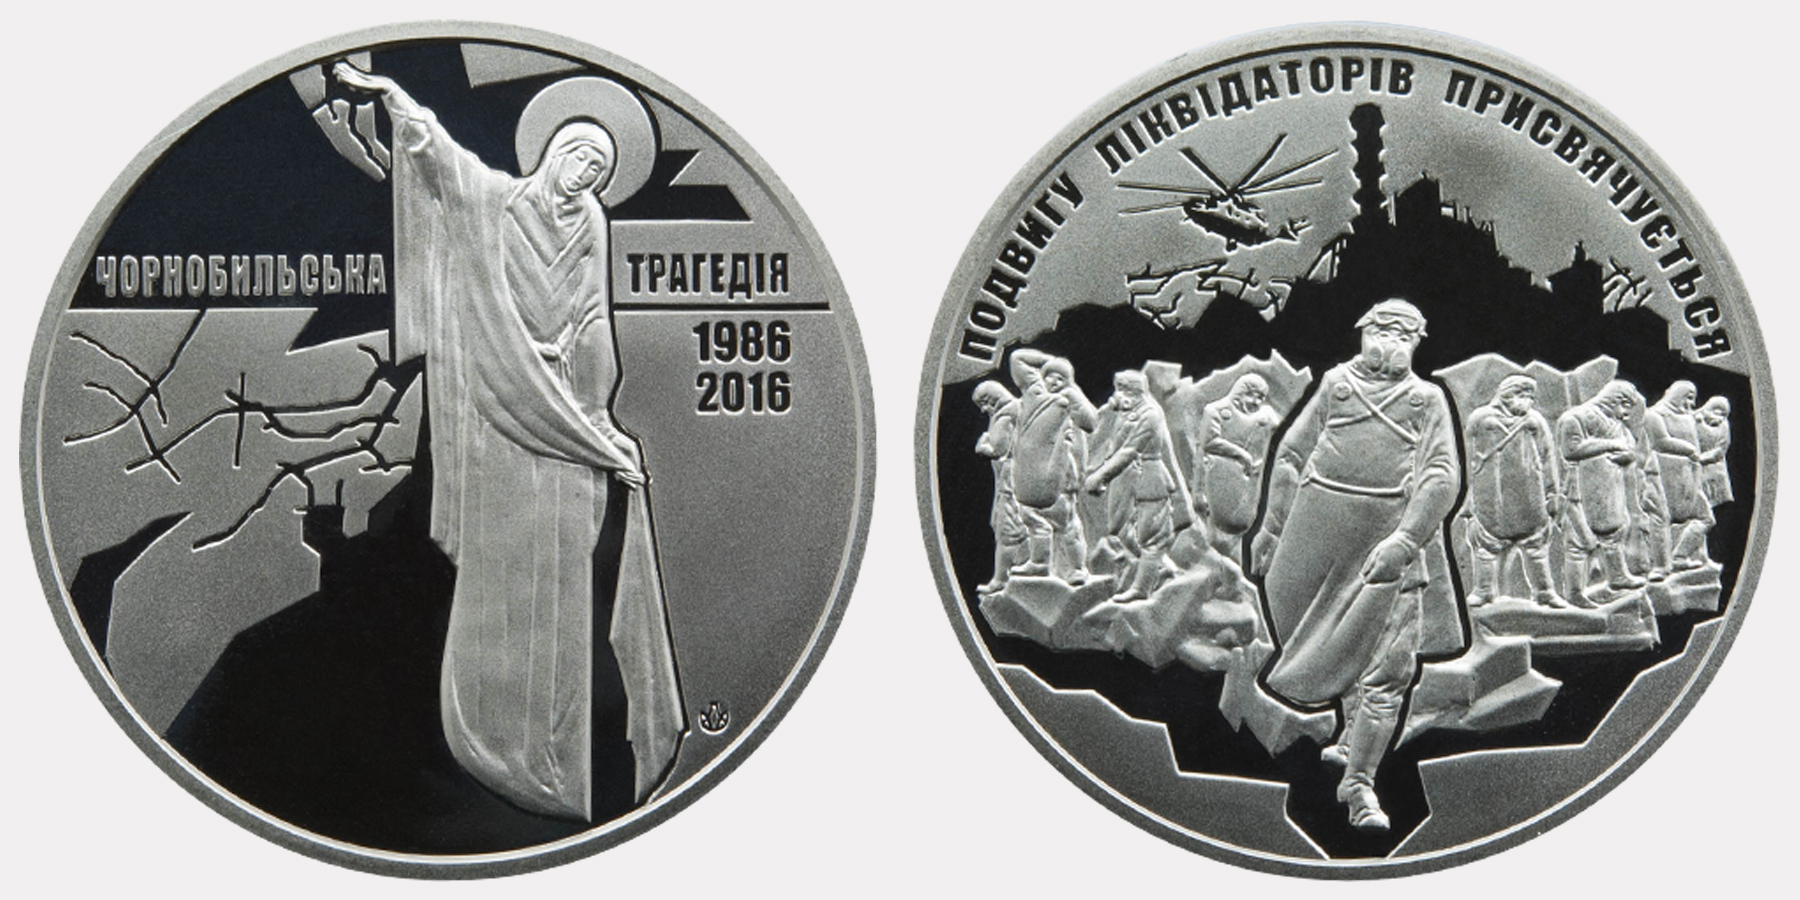 Chornobyl Medal 2016